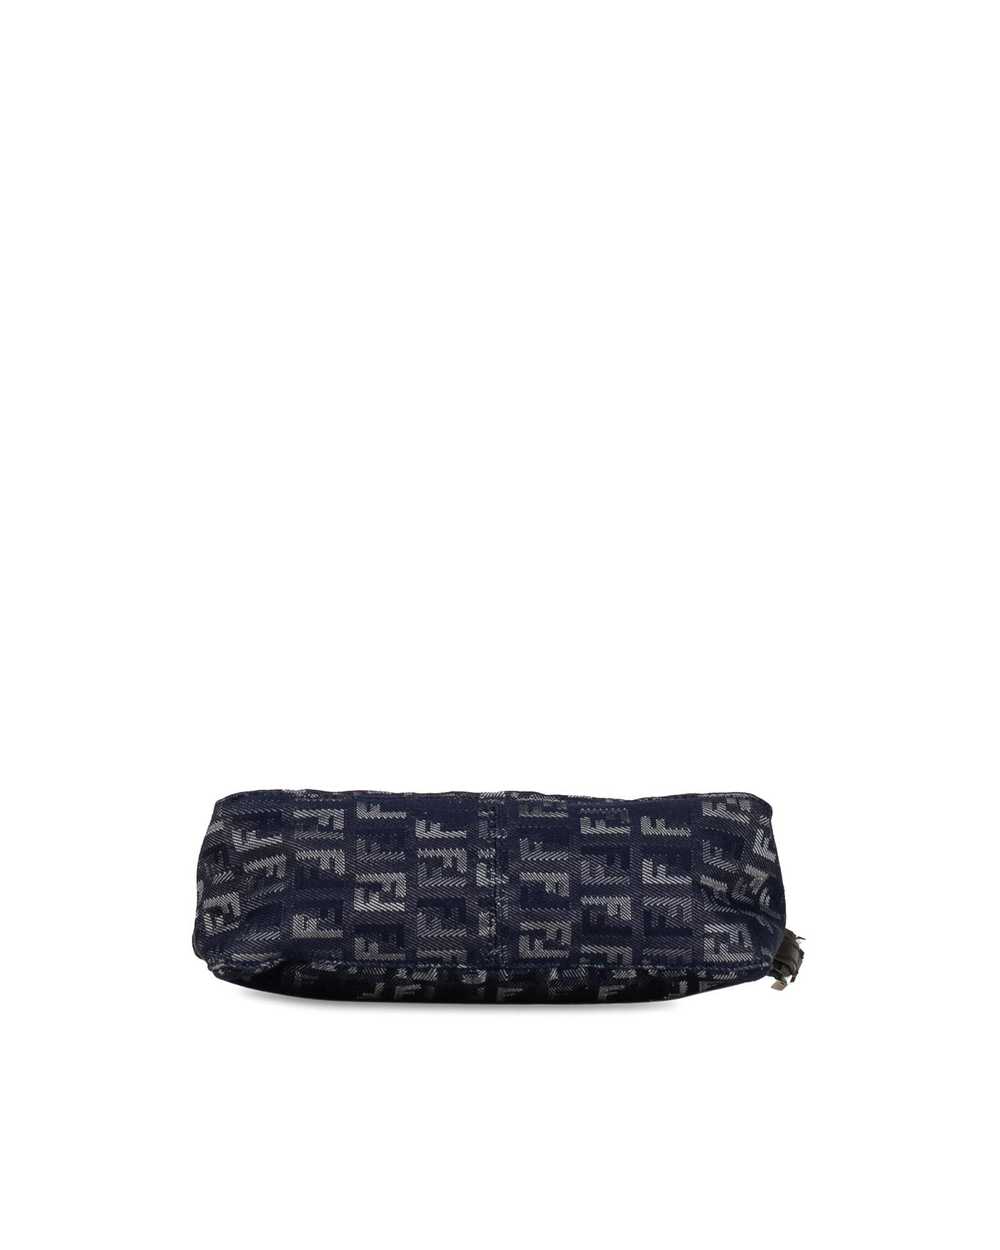 Fendi Denim Shoulder Bag with Top Zip Closure - image 4